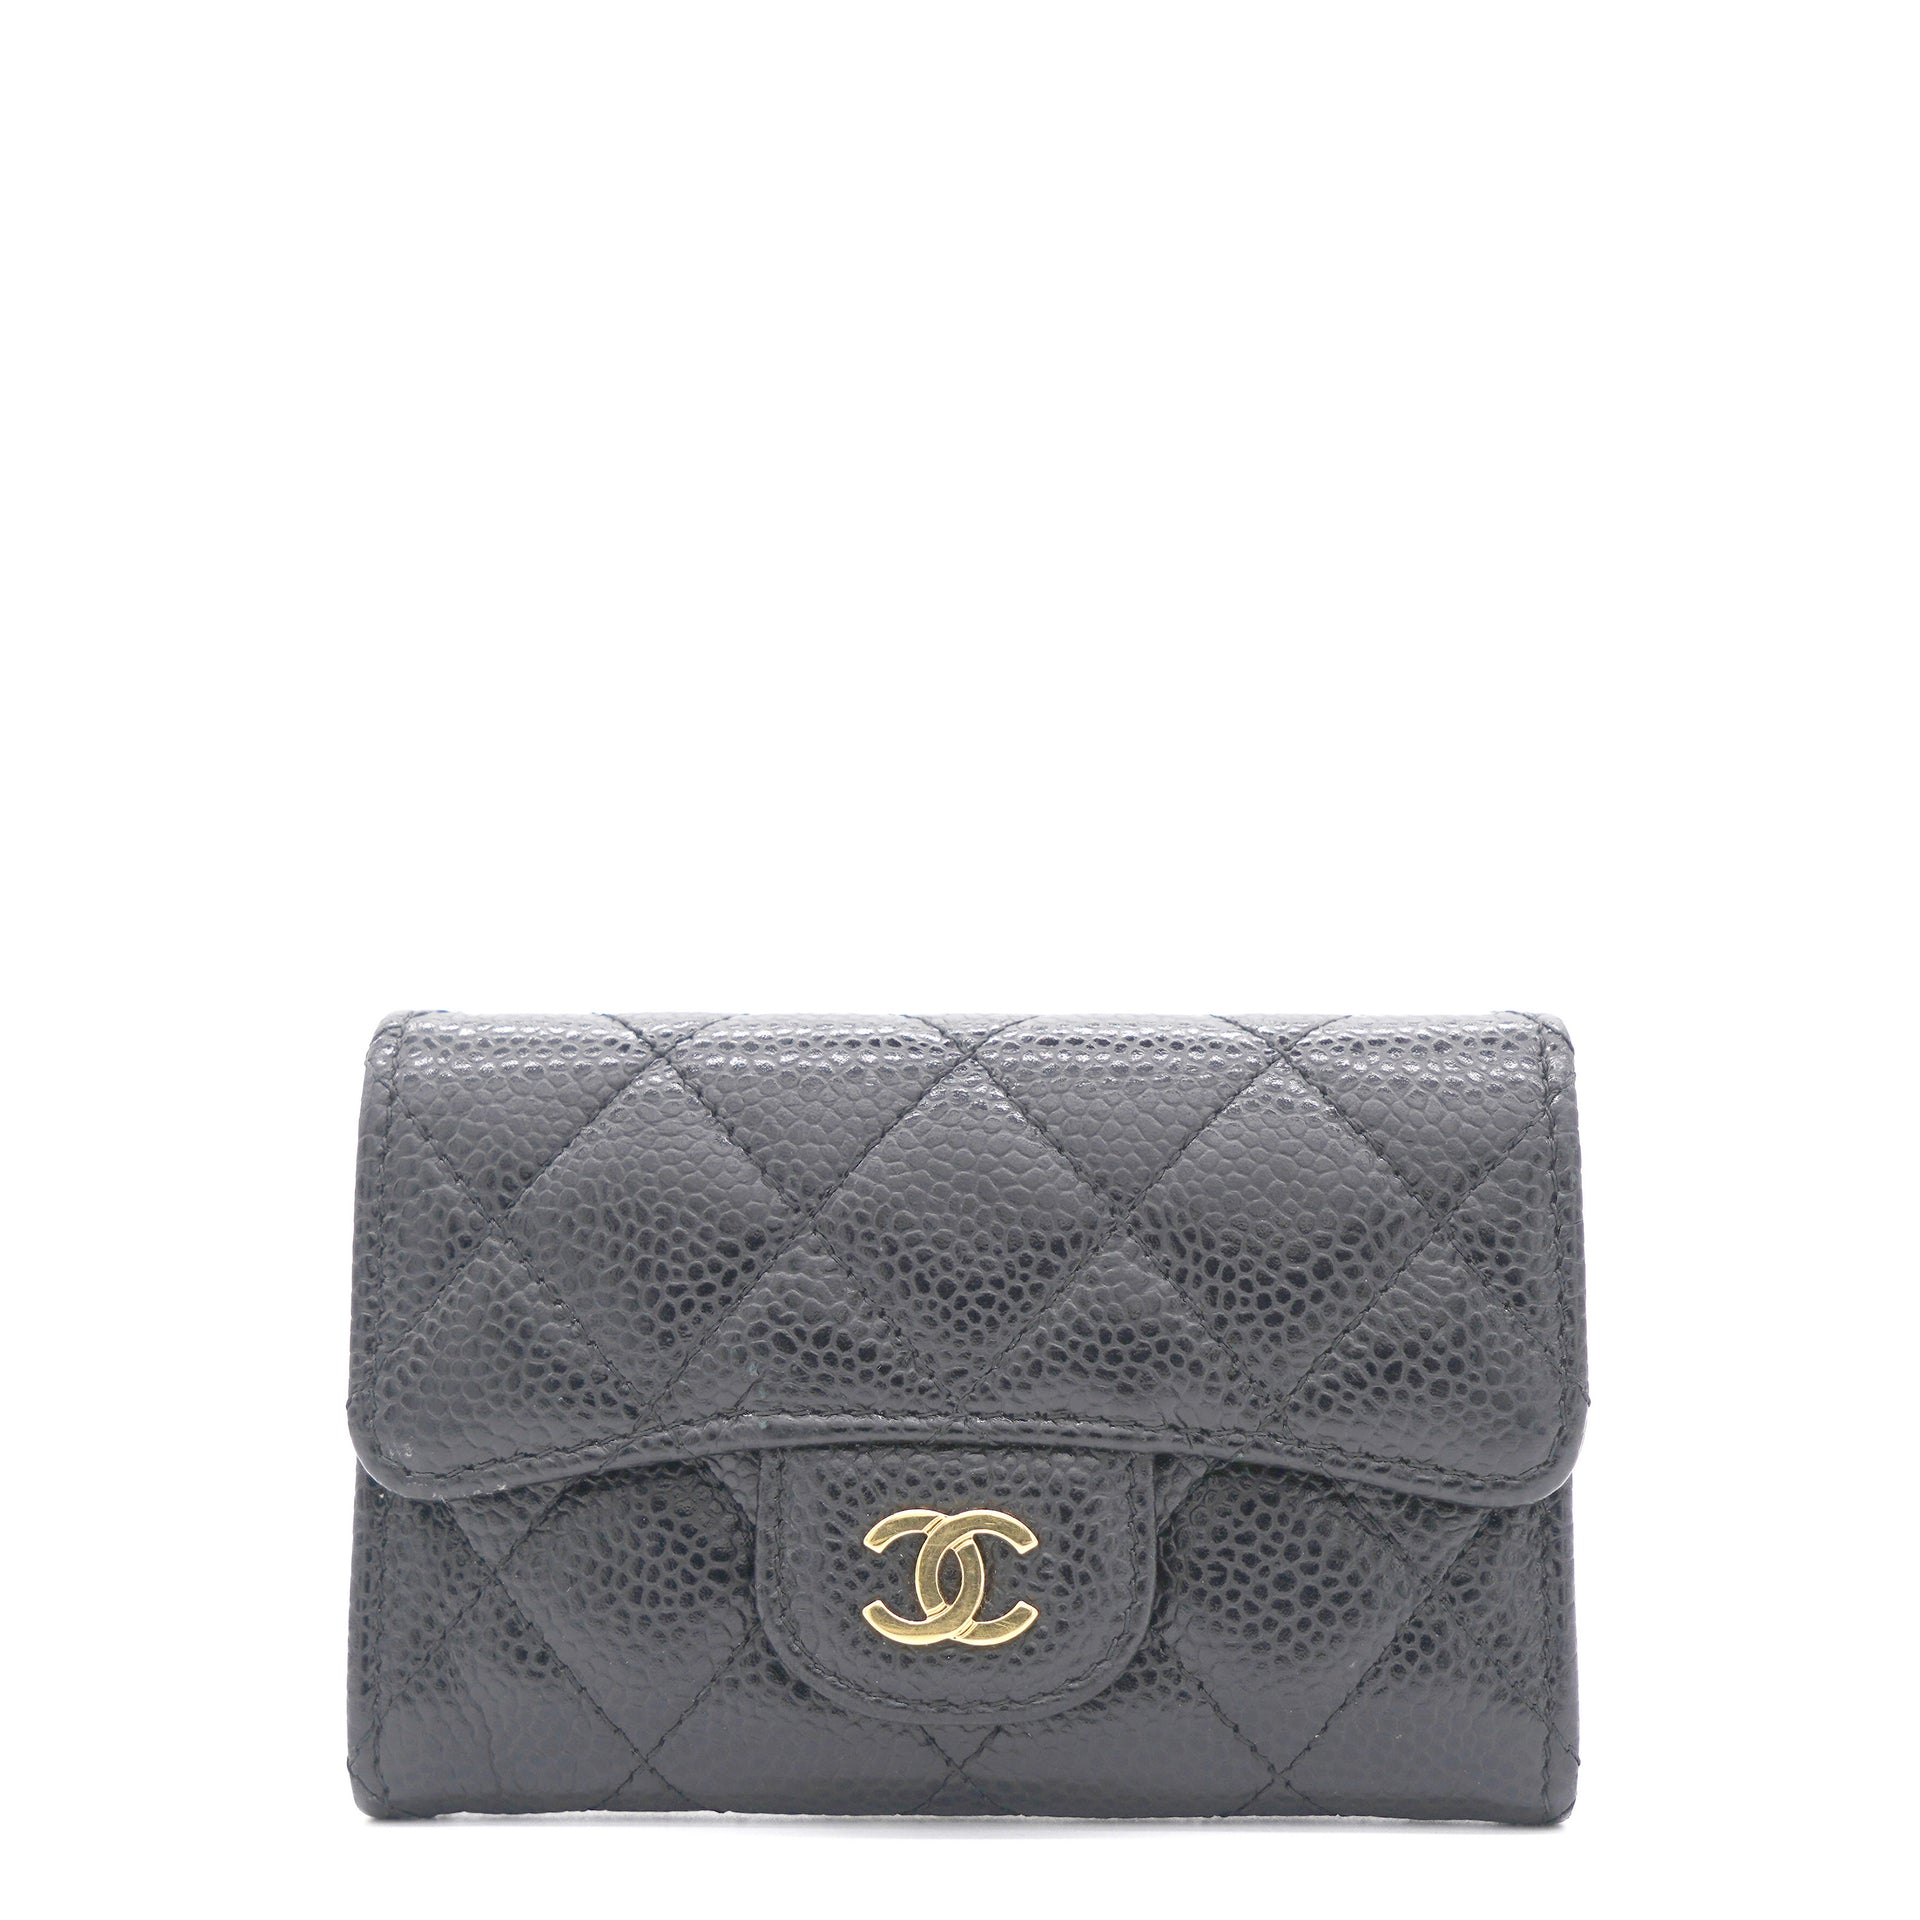 Chanel classic Caviar Wallet